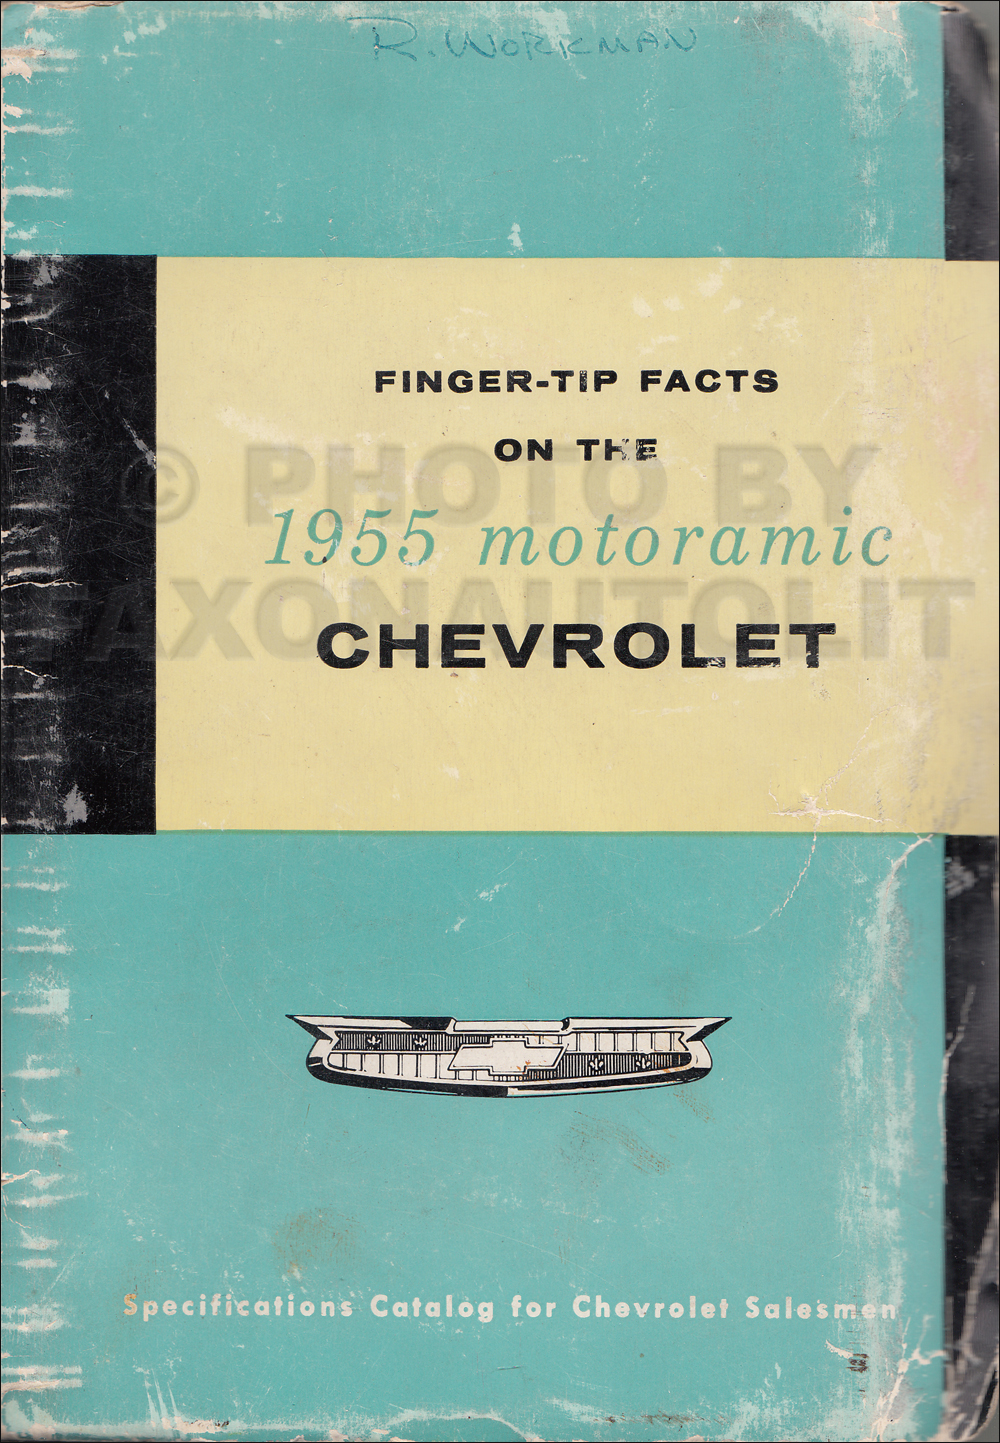 1955 Chevrolet Car Finger Tip Facts Book Dealer Album Original